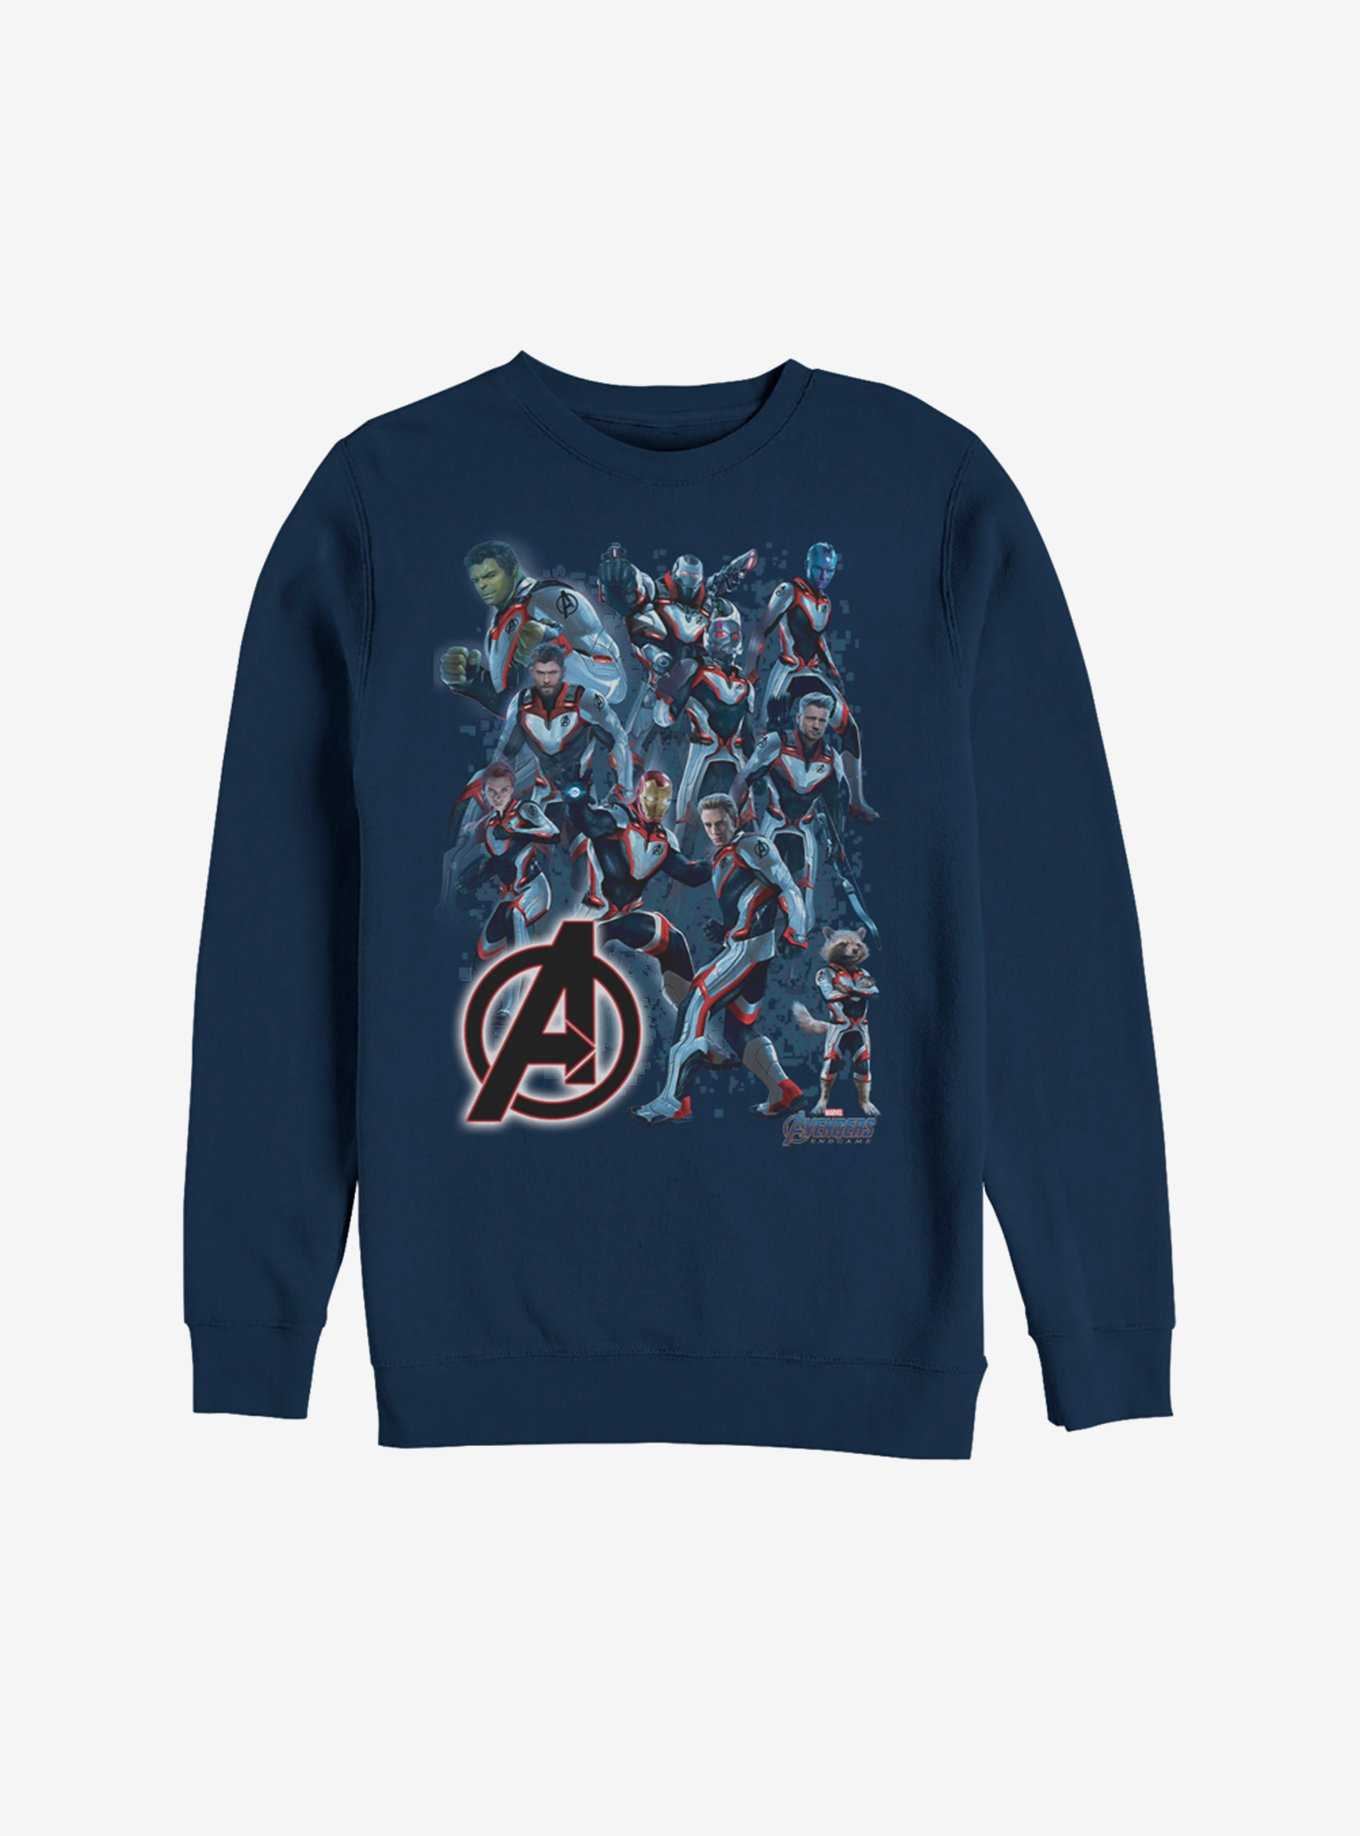 Marvel Avengers: Endgame Suited Up Sweatshirt, , hi-res